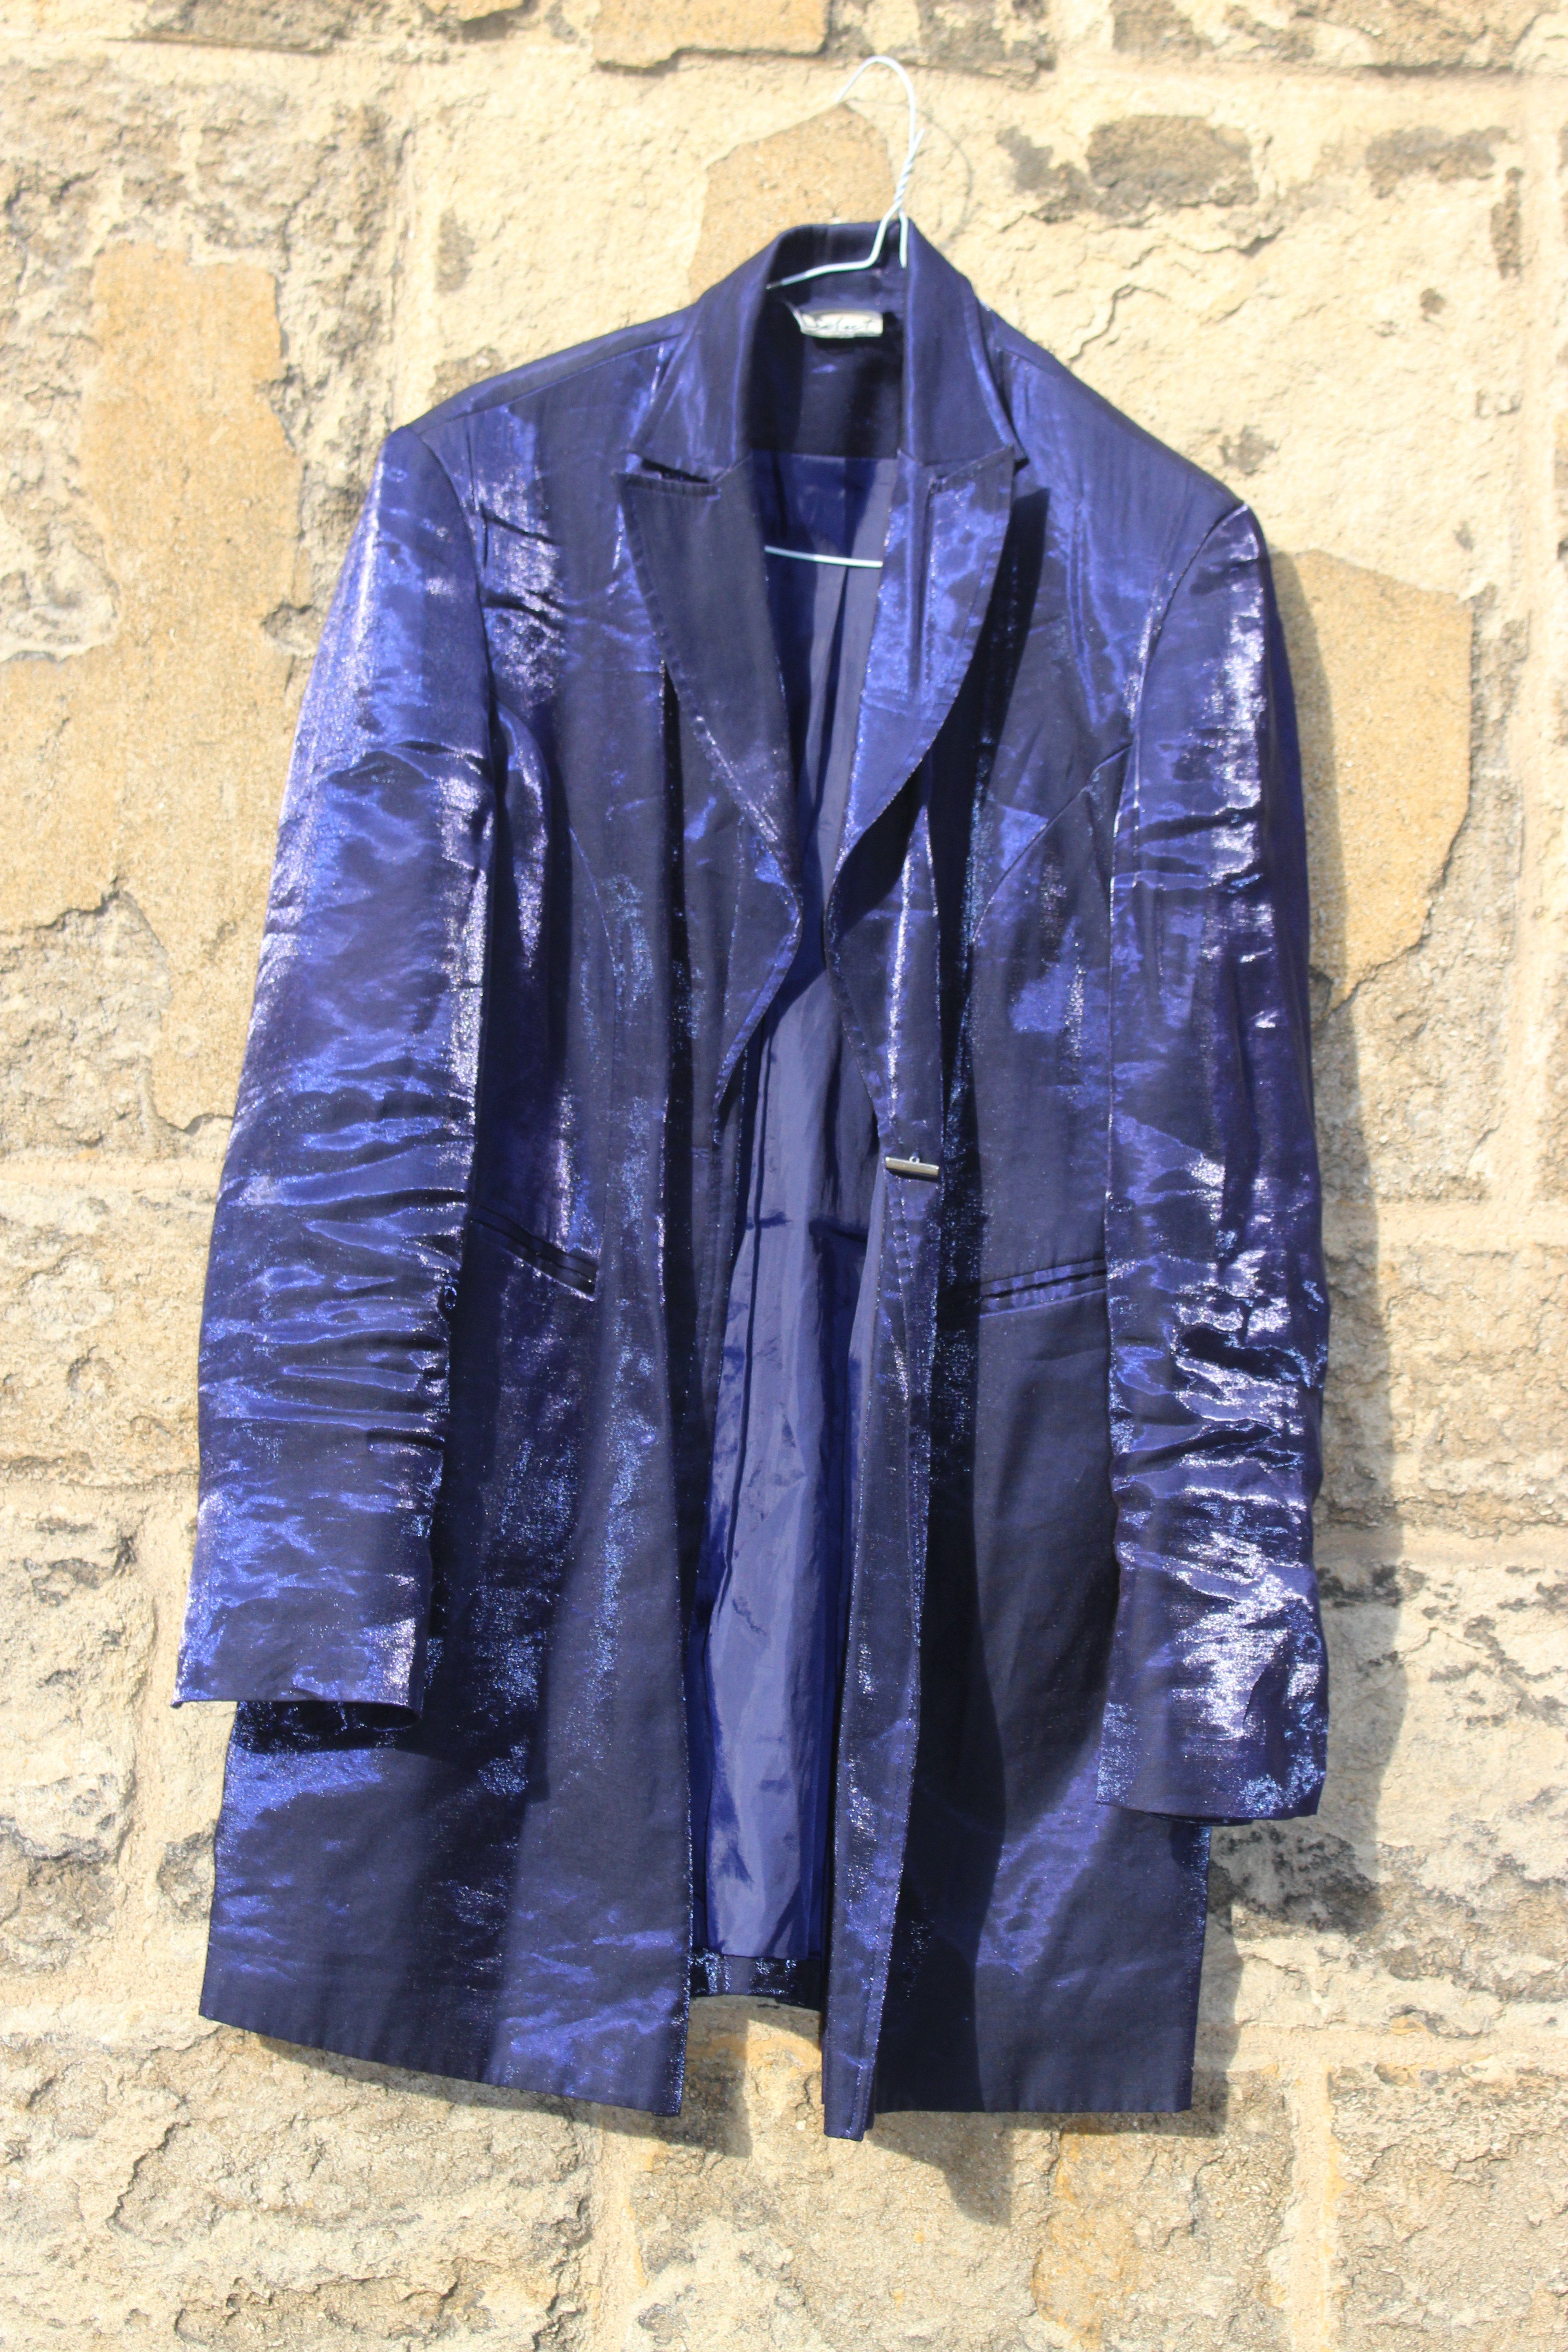 Select purple satin jacket, from Unicorn, 5 Ship Street, Oxford